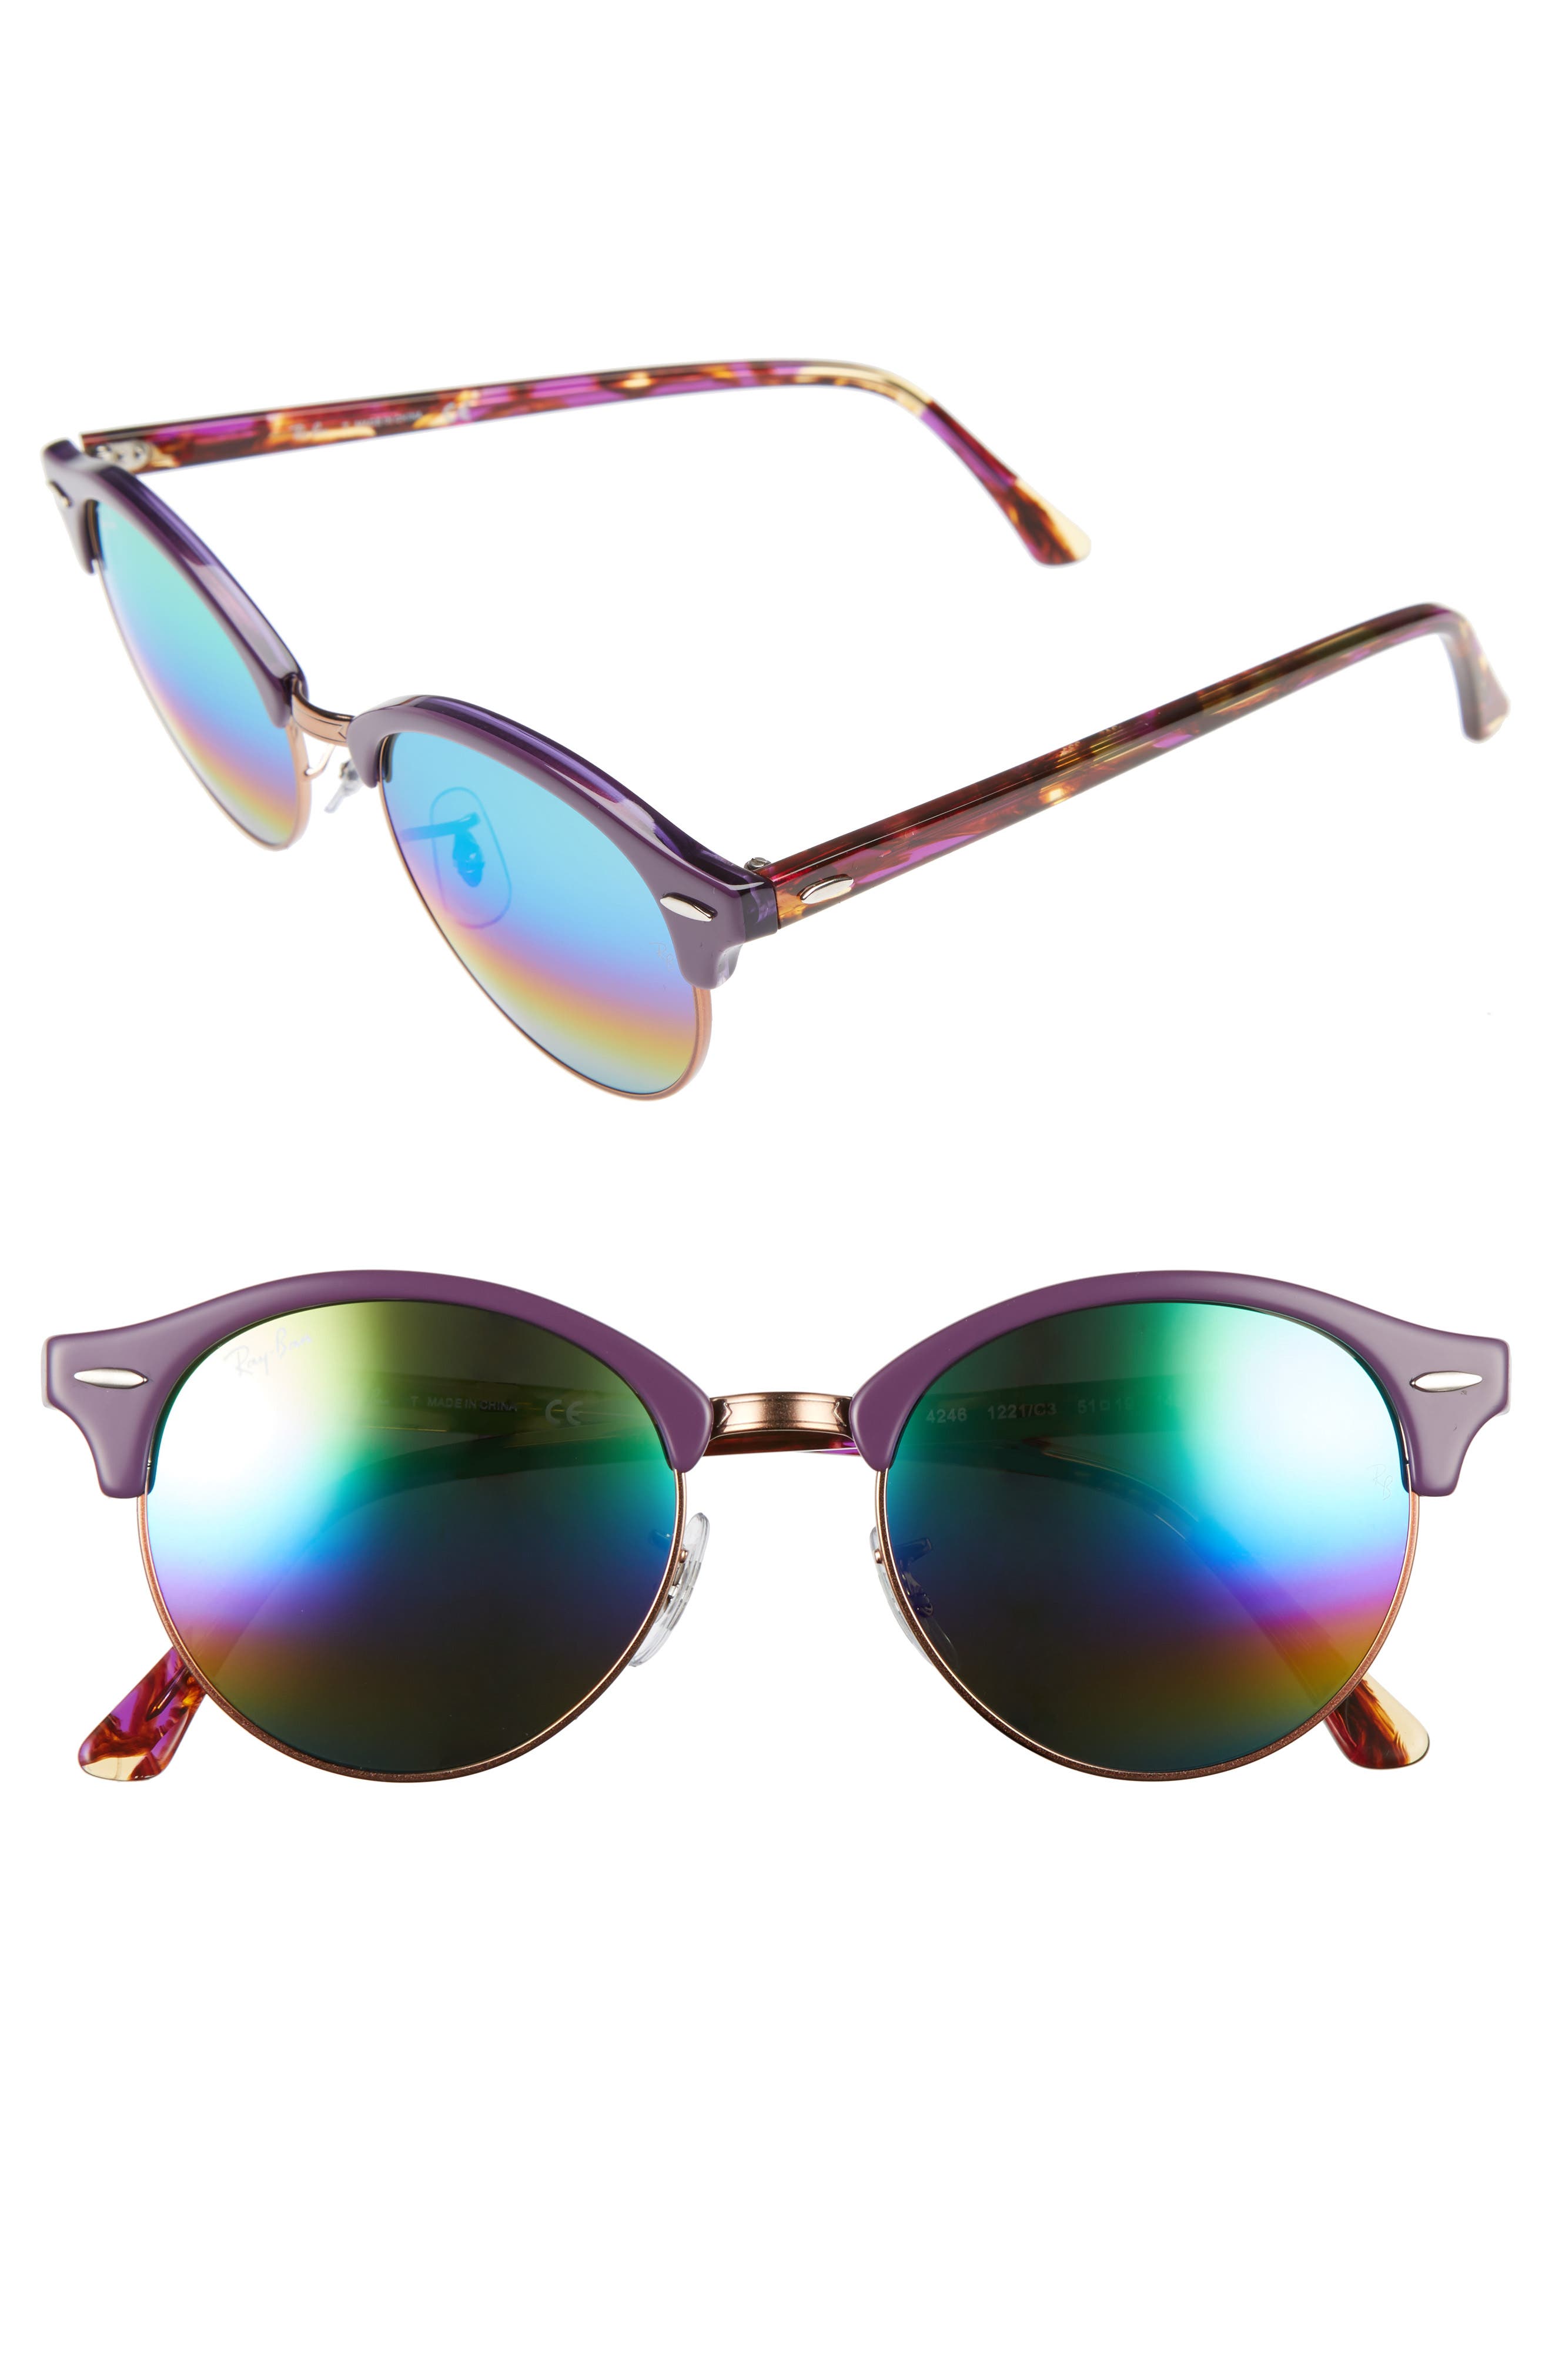 Ray Ban 51mm Icons Clubround Phantos Sunglasses Hautelook